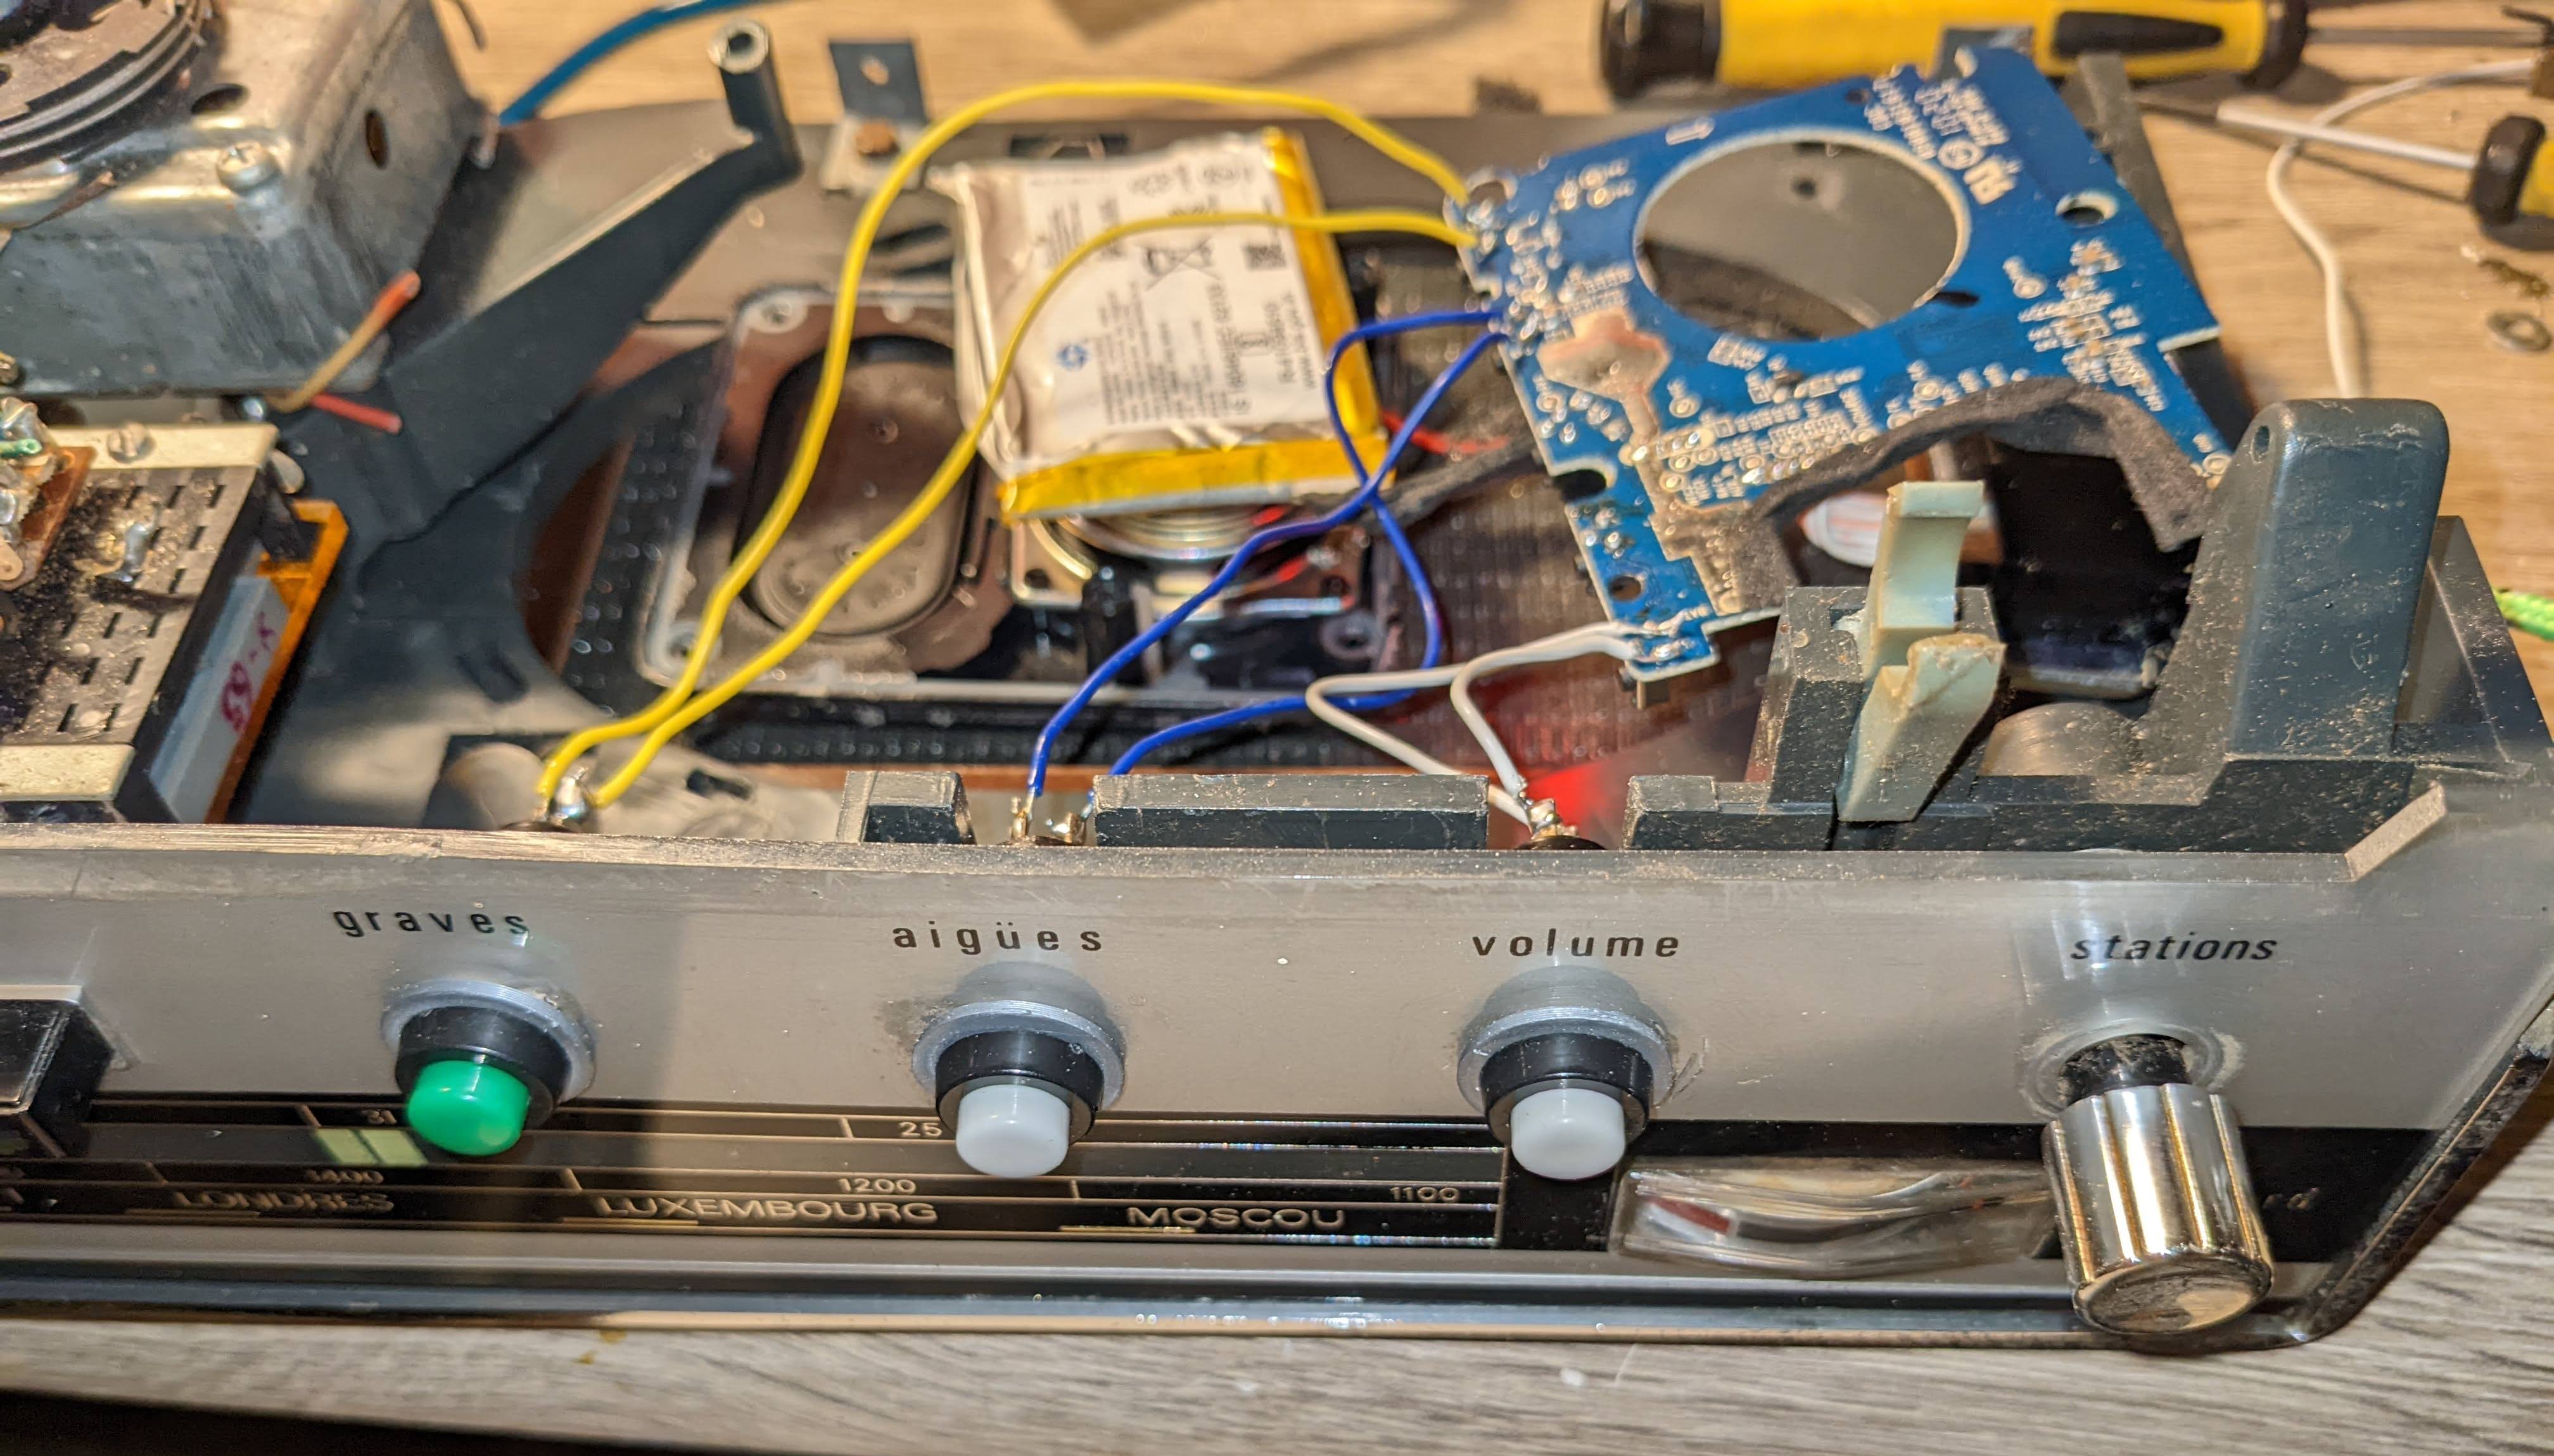 Install JBL bluetooth speaker in old receiver